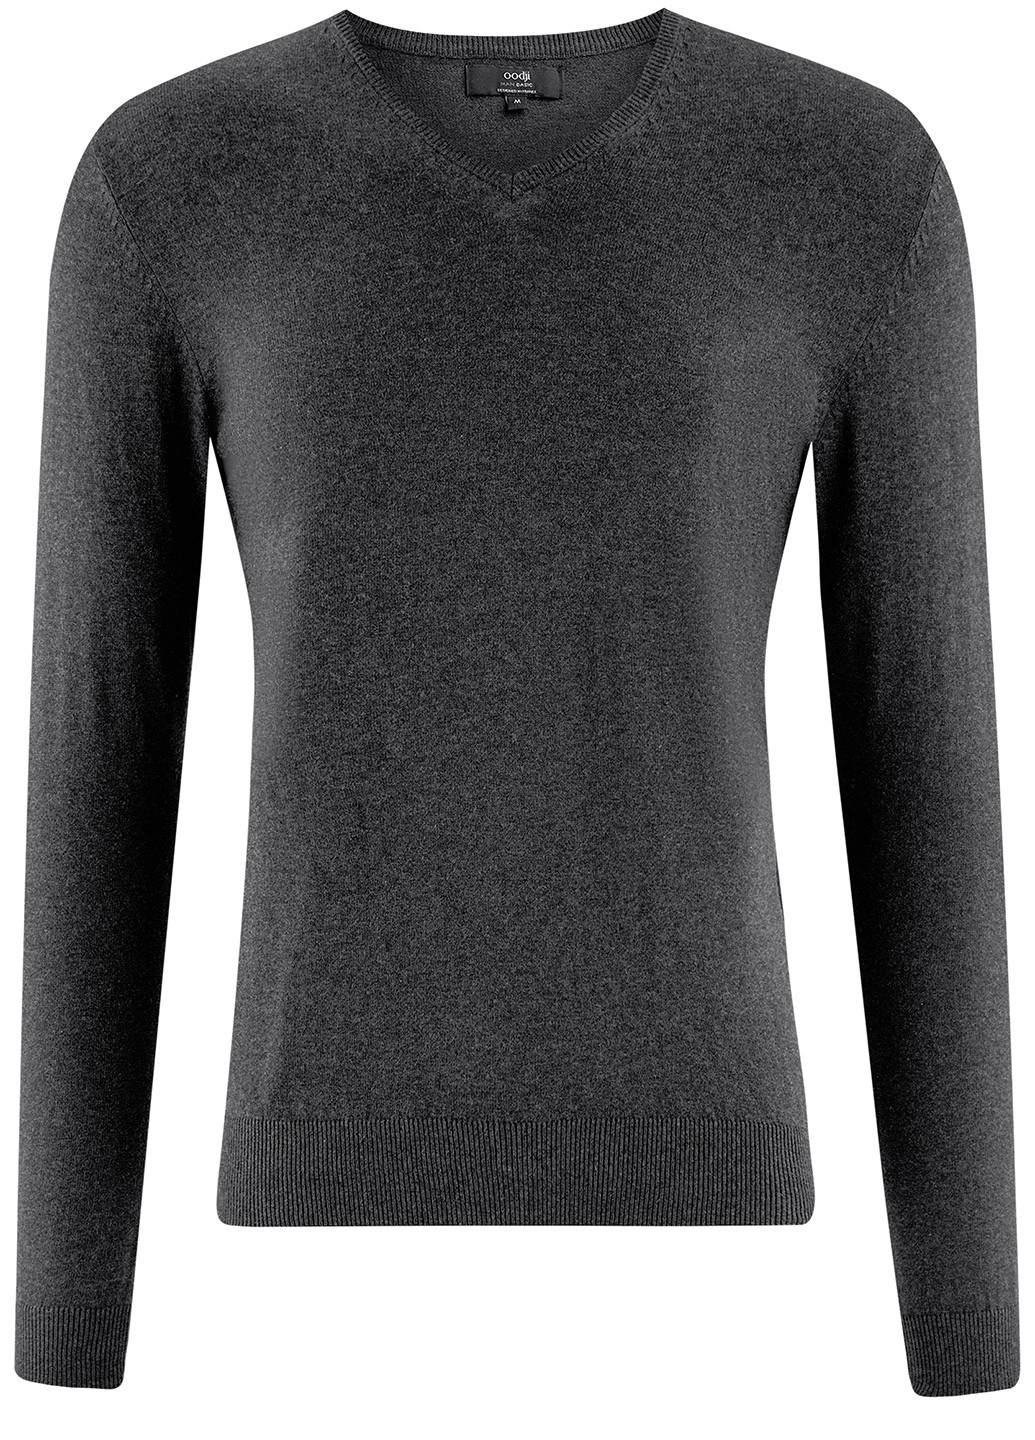 Грифельно-серый демисезонный пуловер пуловер Oodji